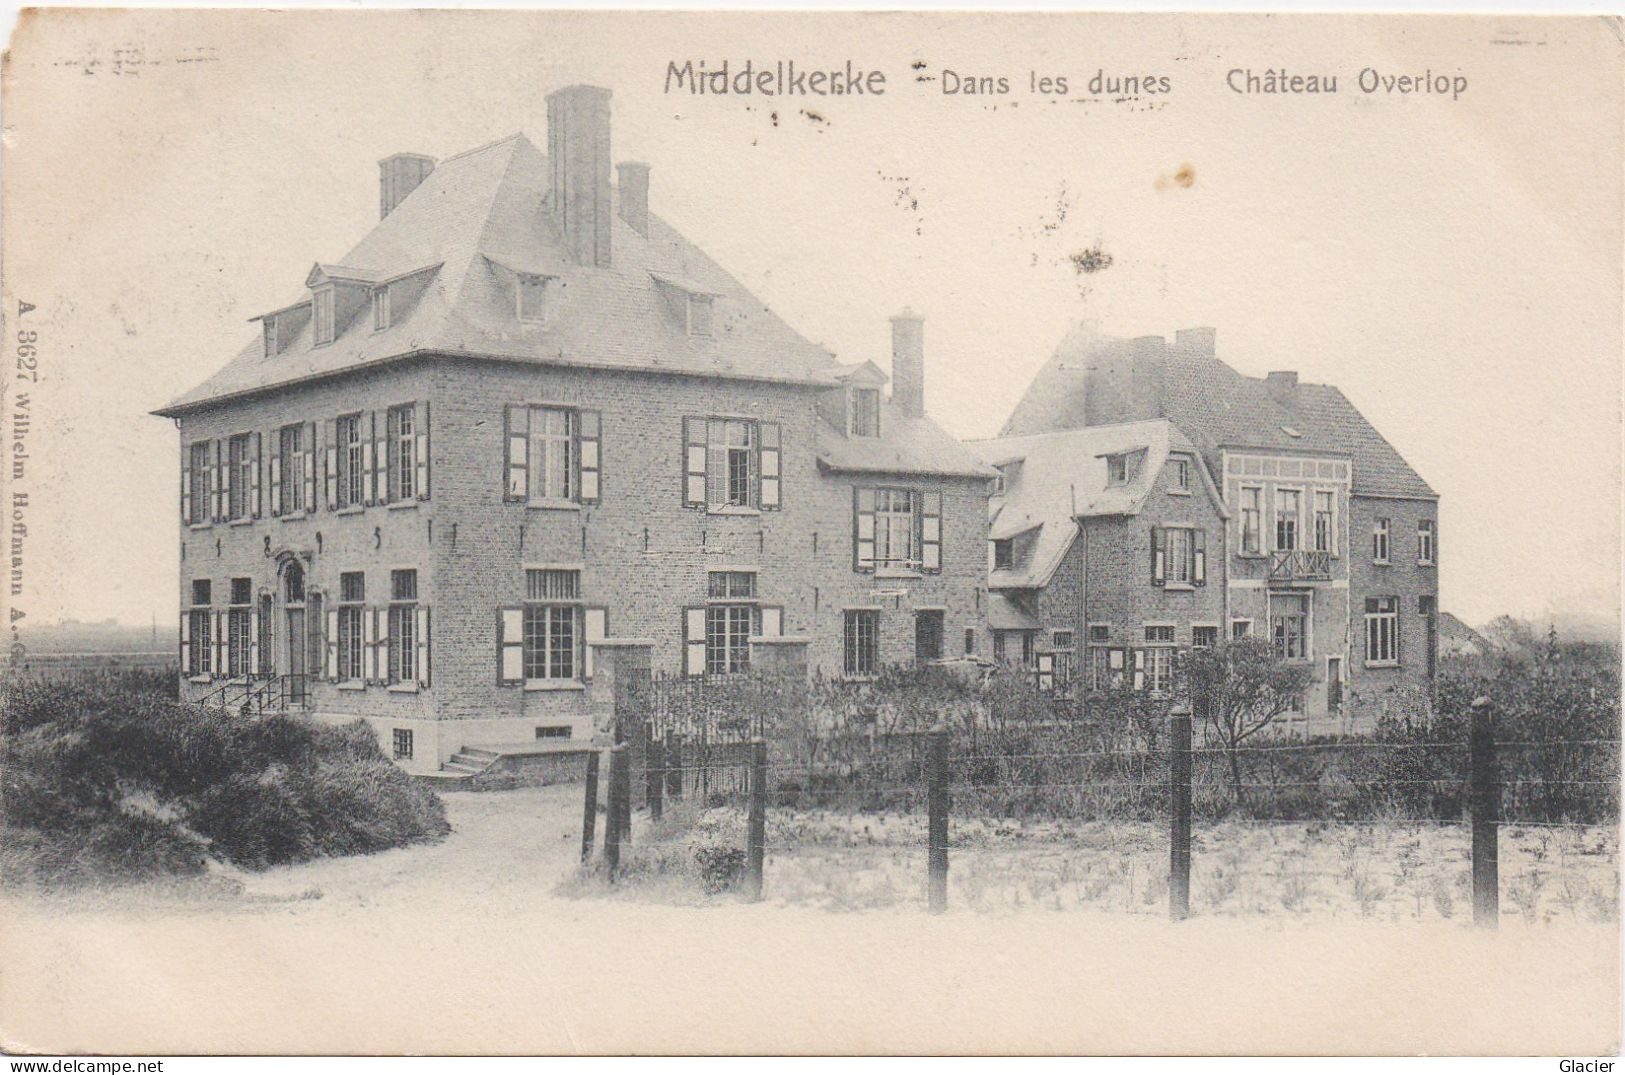 Middelkerke Plage - Dans Les Dunes - Château Overlop - Middelkerke